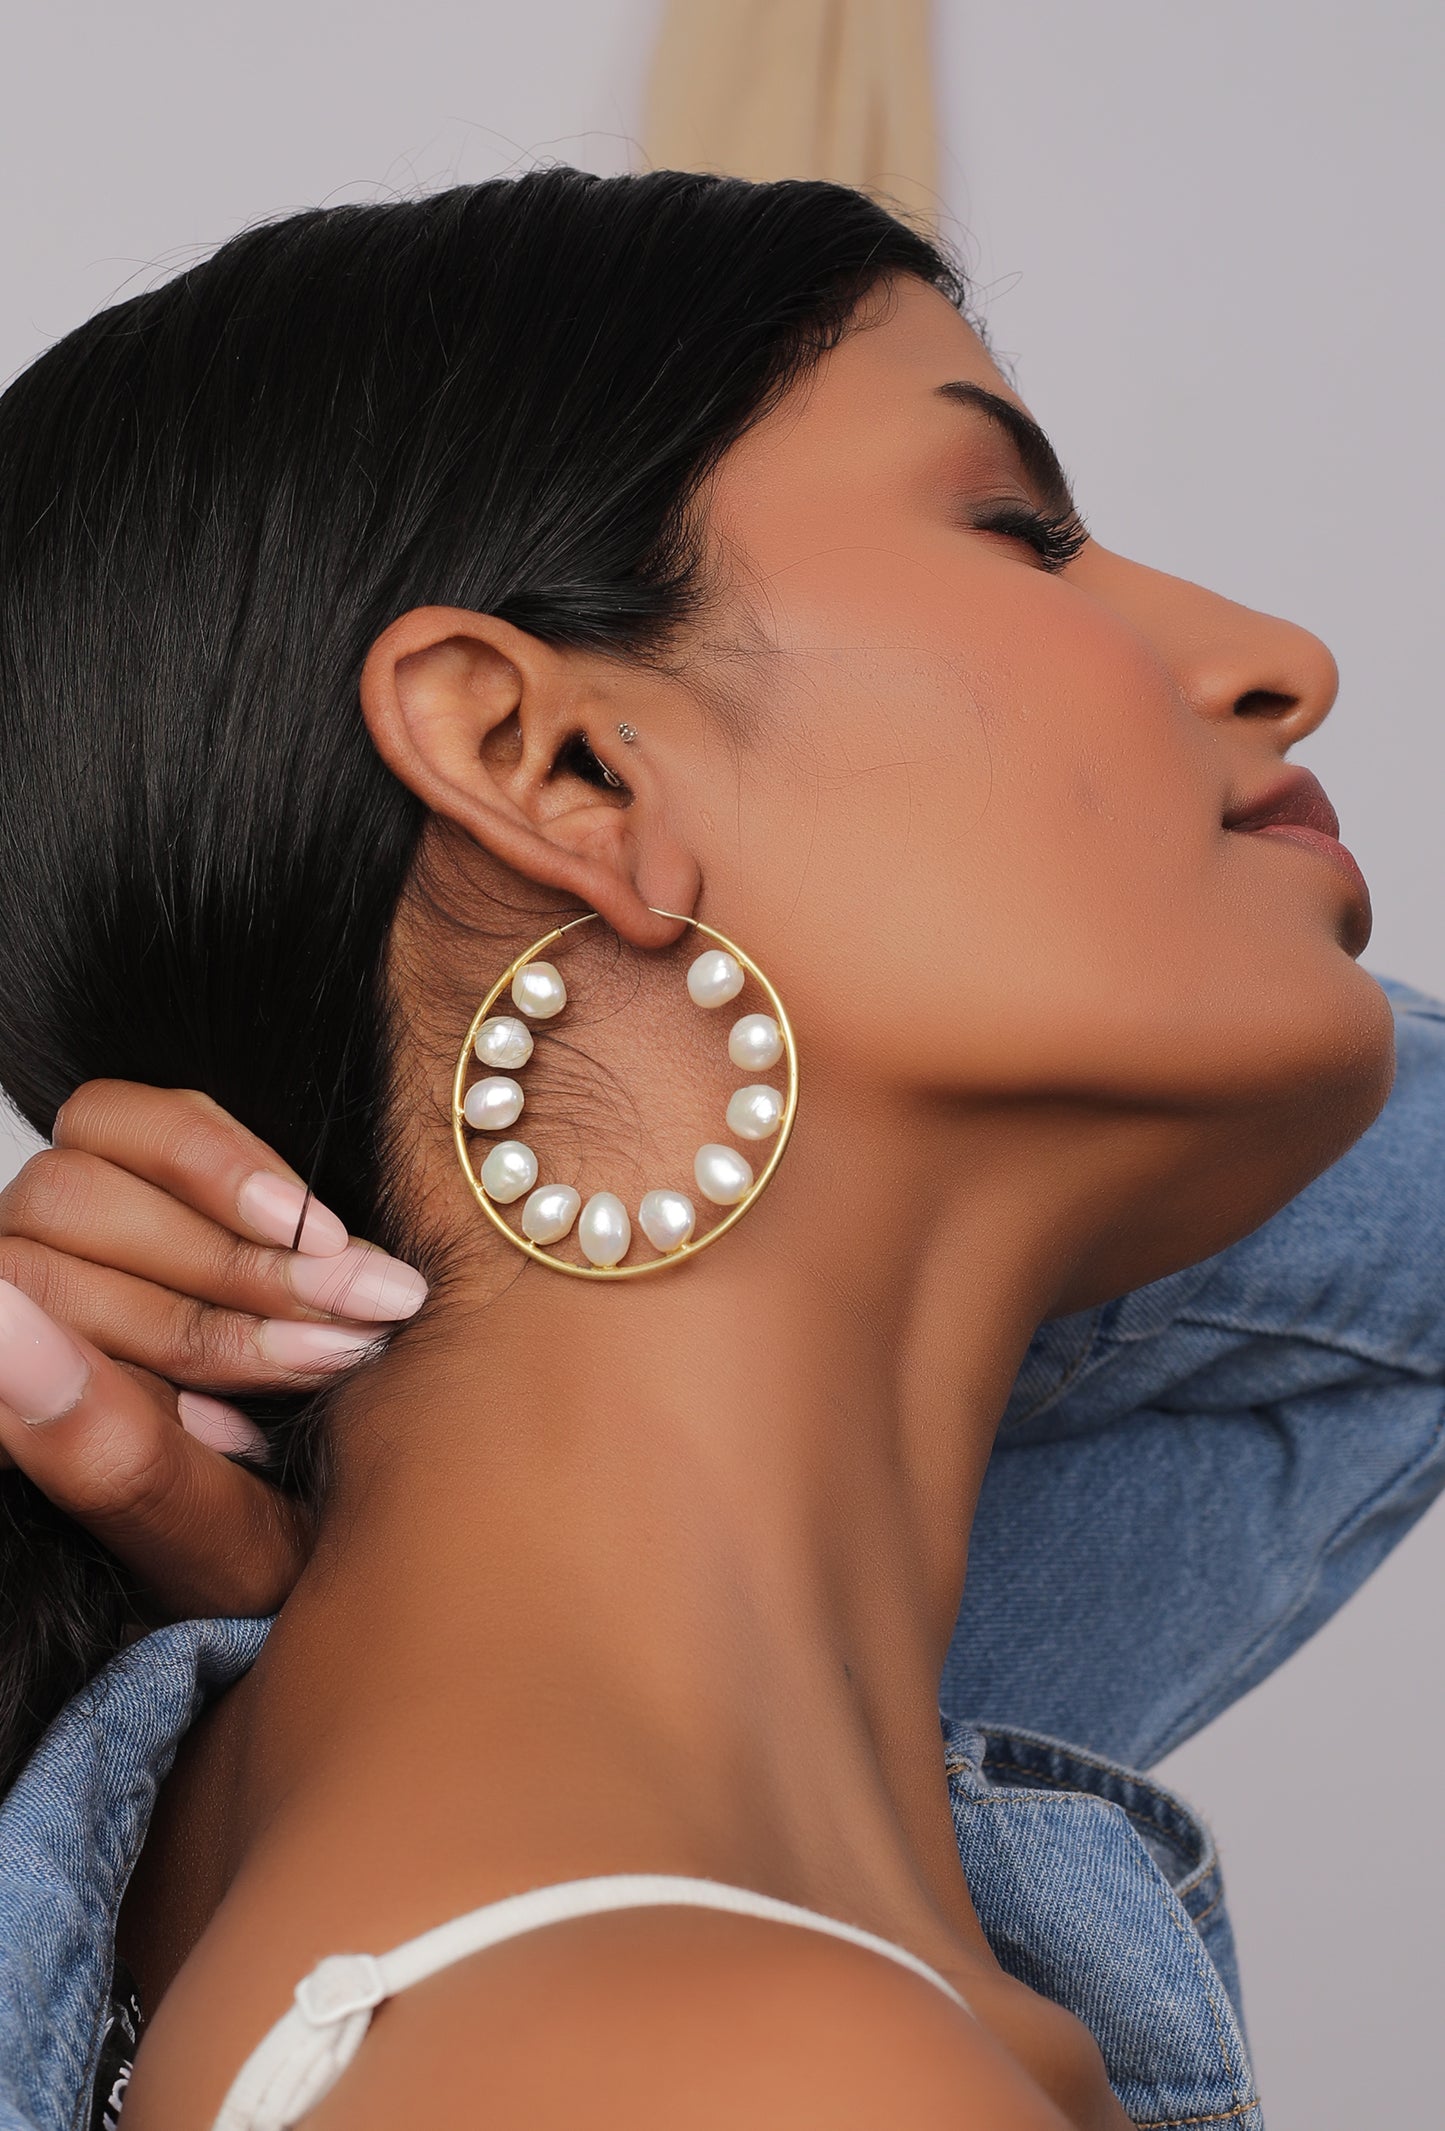 The Petal Cipay Earrings